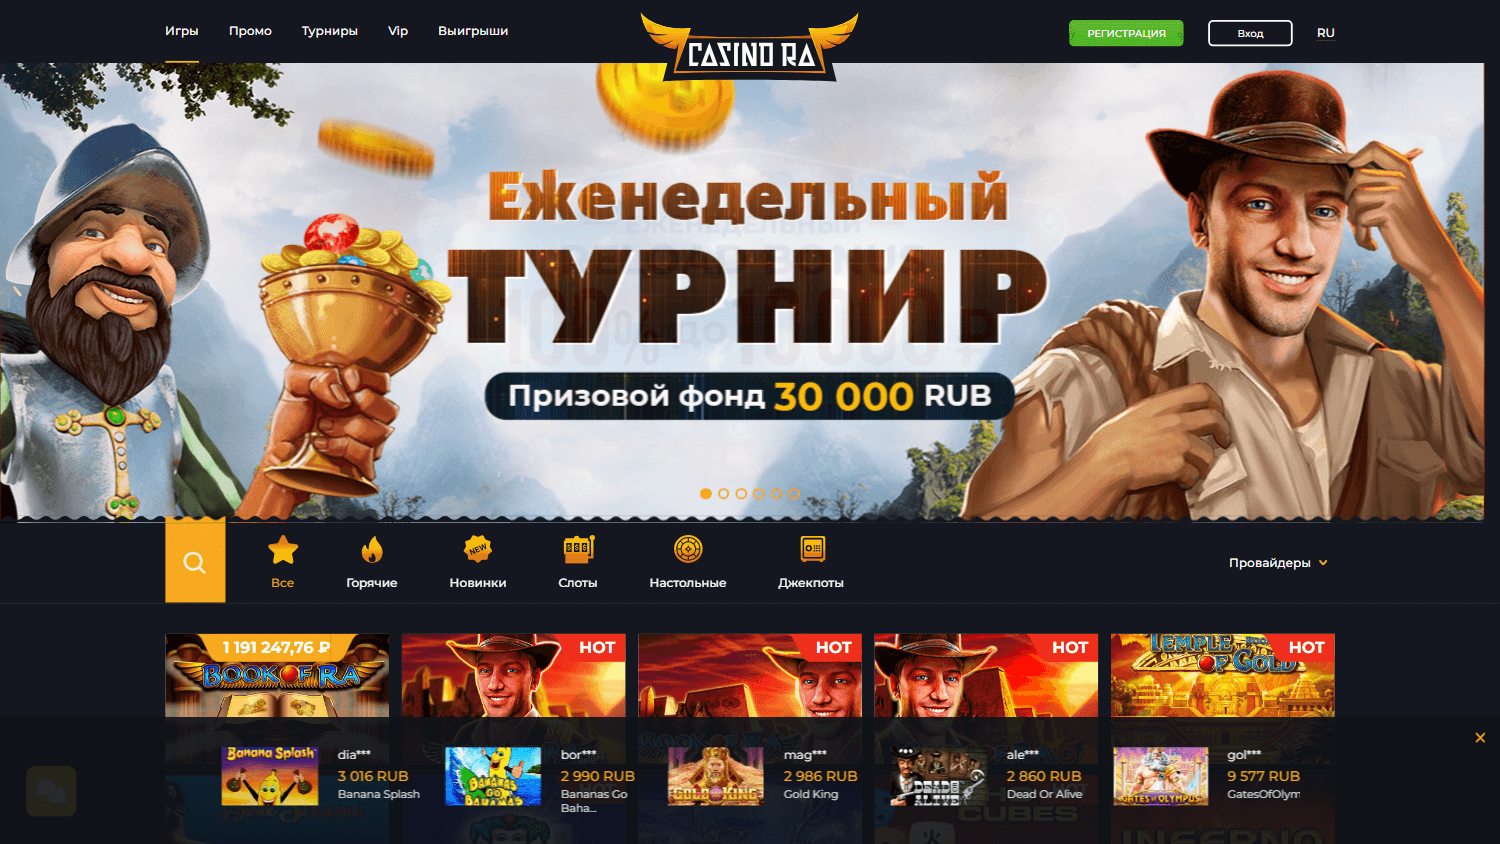 casino_ra_homepage_desktop